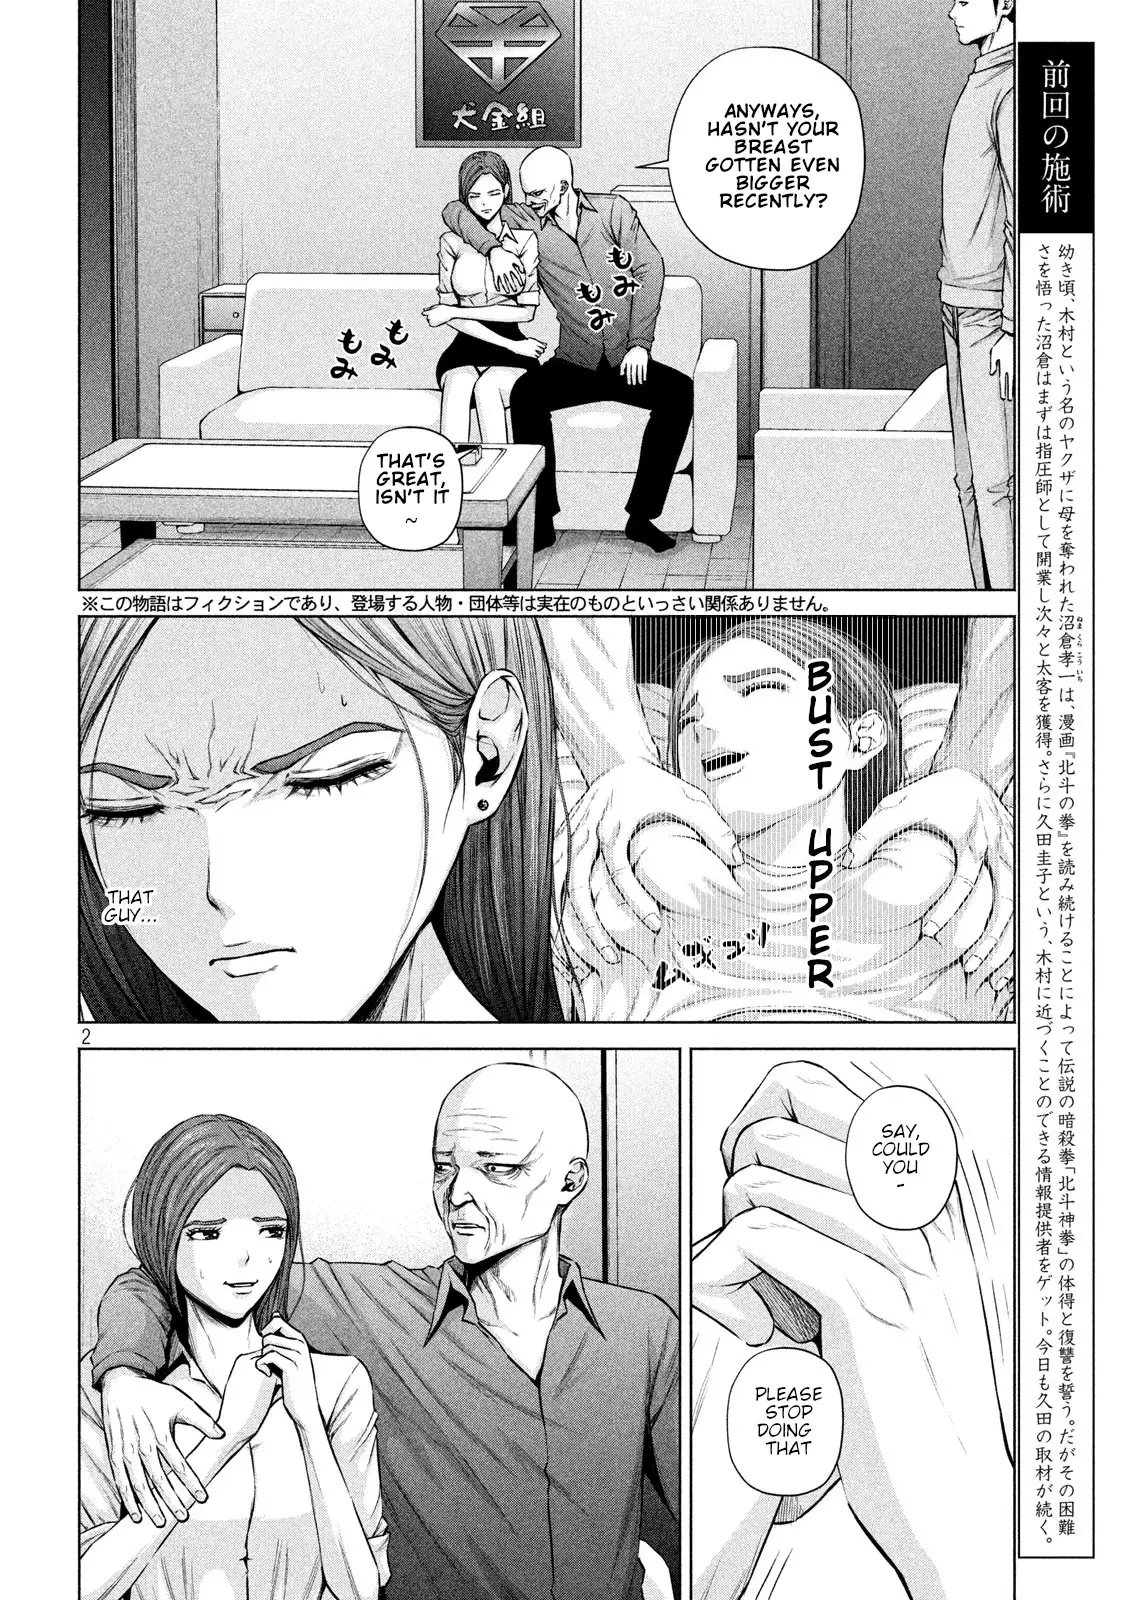 Send My Regards To Kenshiro - 9 page 2